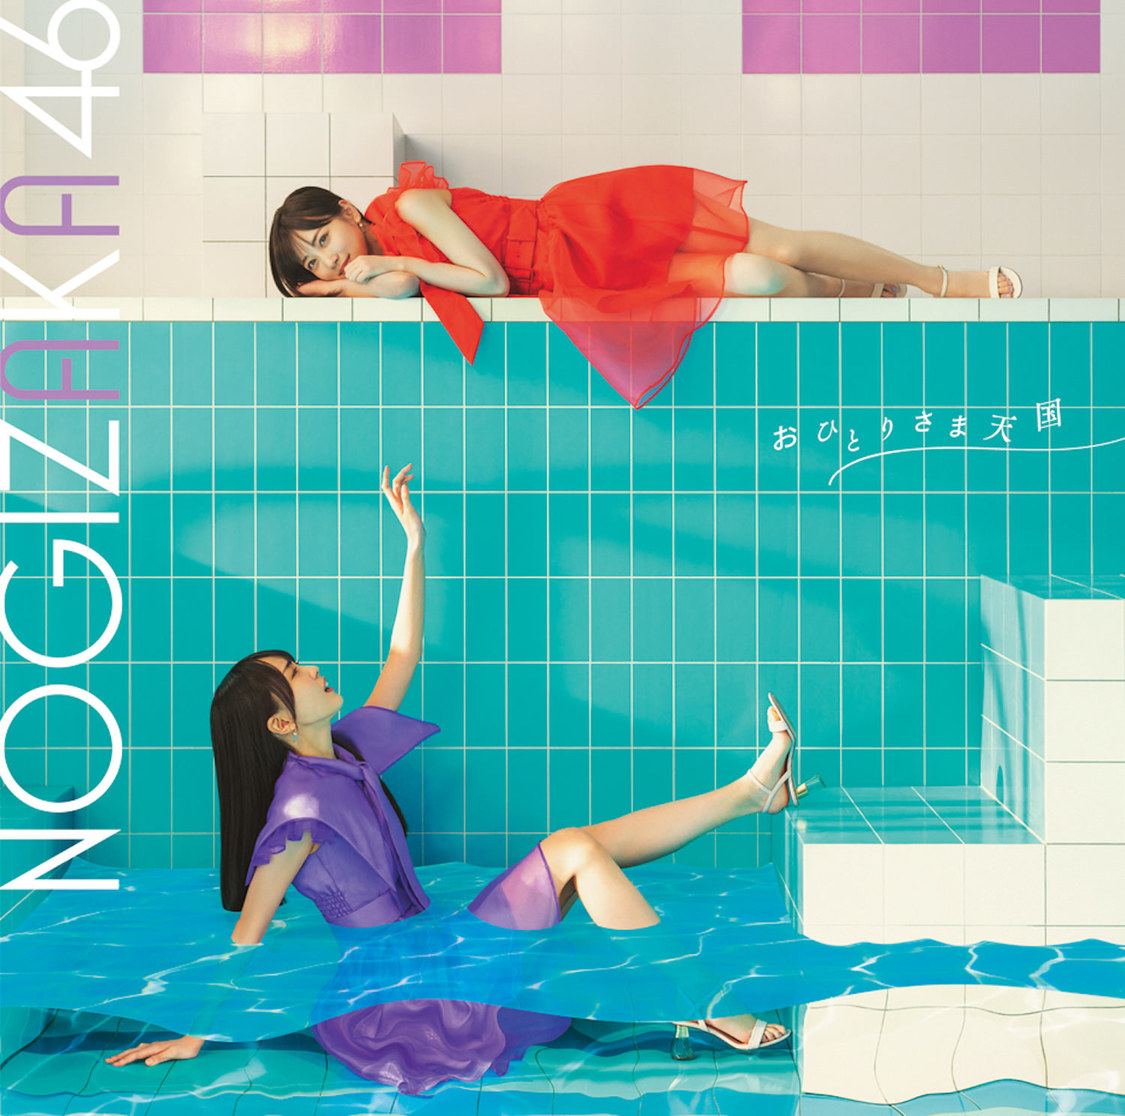 Nogizaka46 — Mug Cup to Sink cover artwork